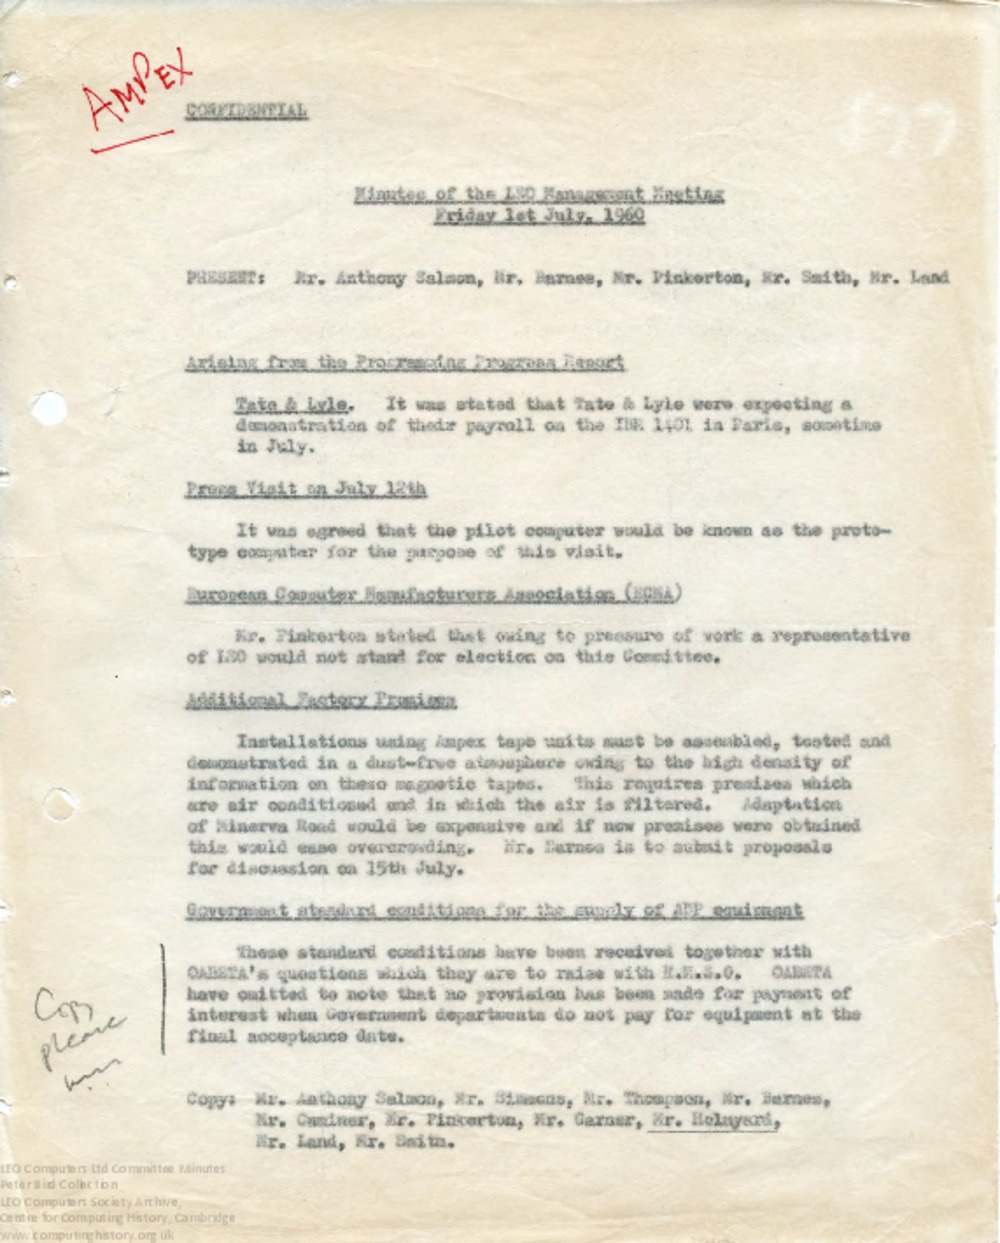 Article: 64398 LEO Management Meeting, 1960 third quarter (Jul-Sep 1960)